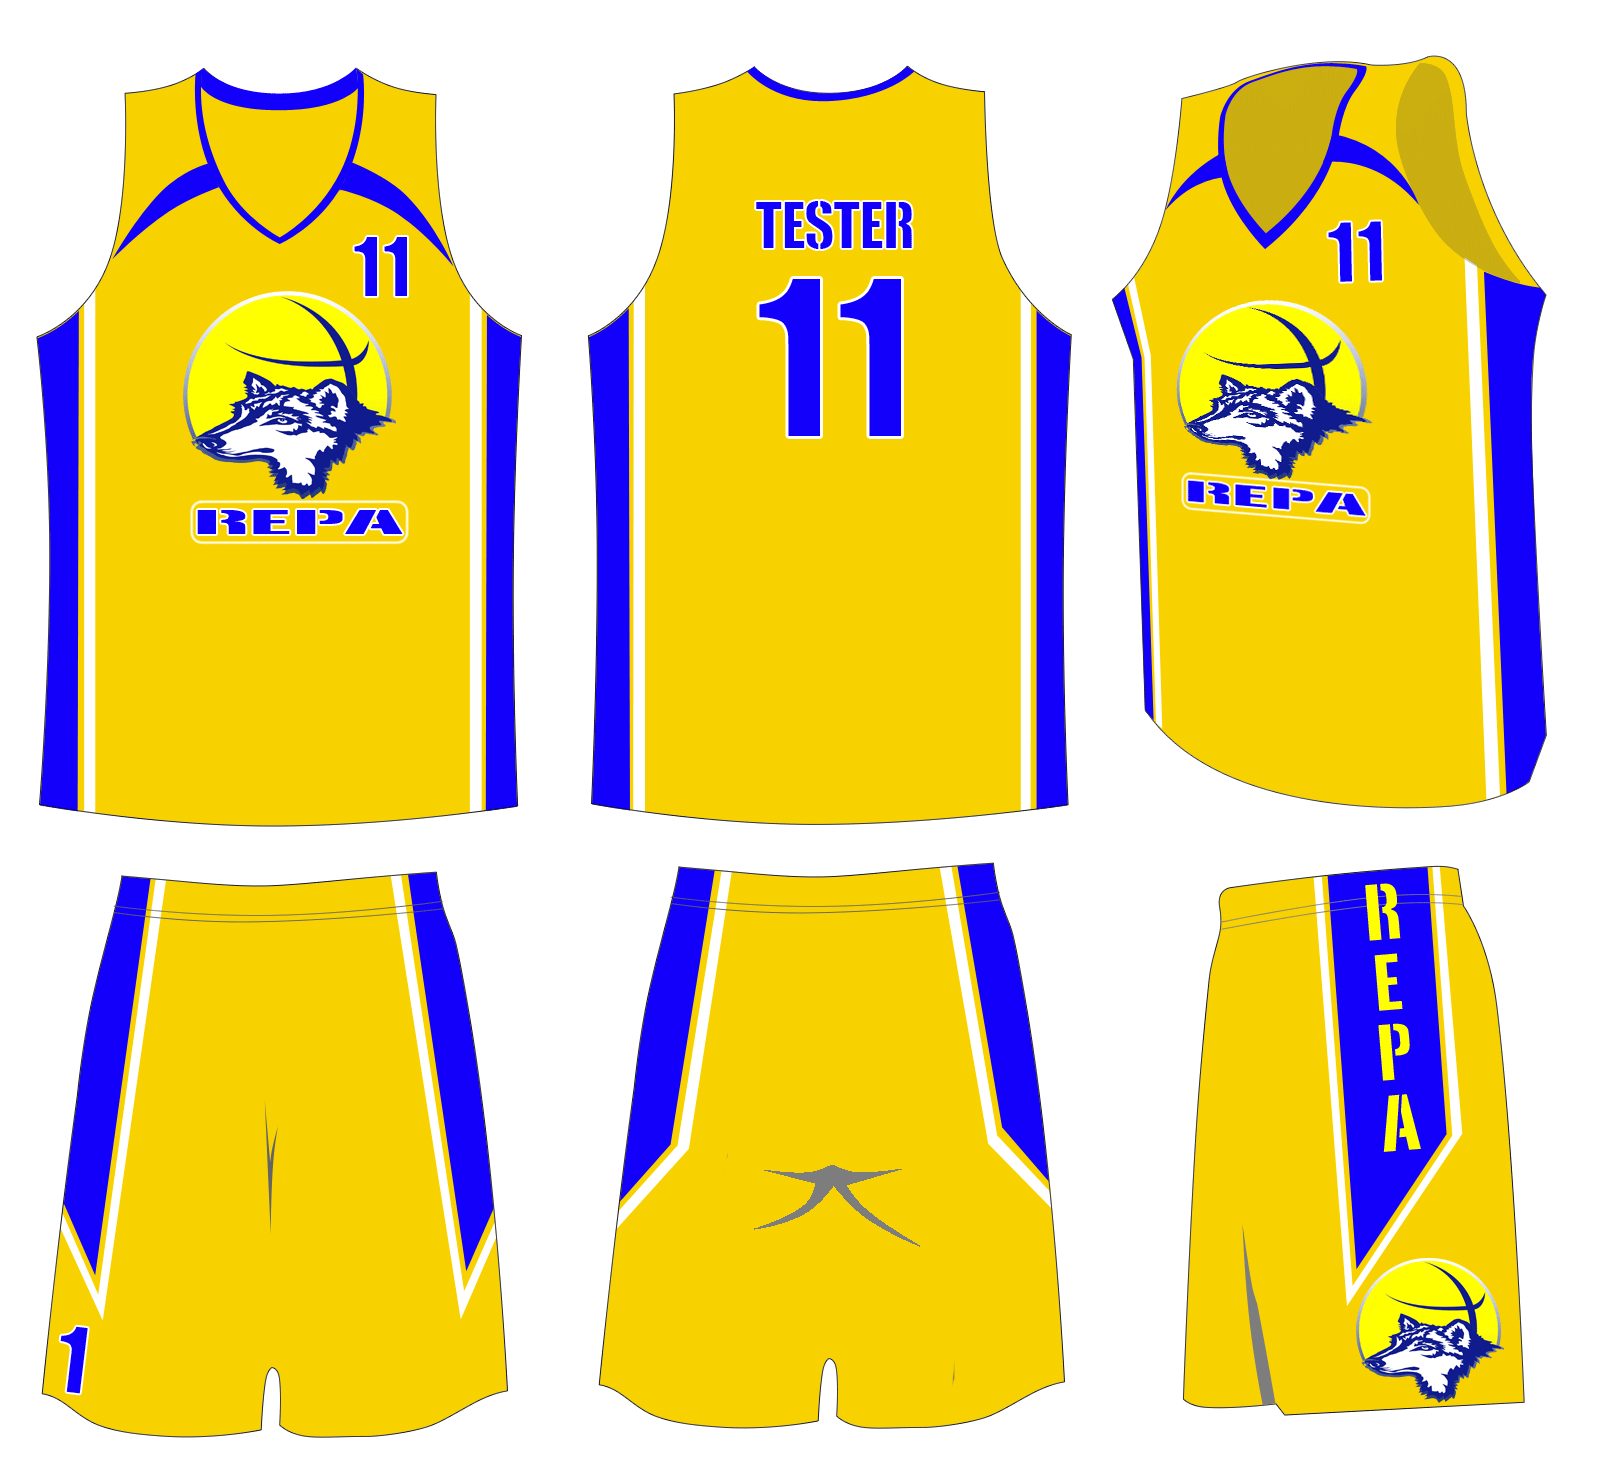 Basketball Uniform and Logo Designs by Romenick Tester at Coroflot.com